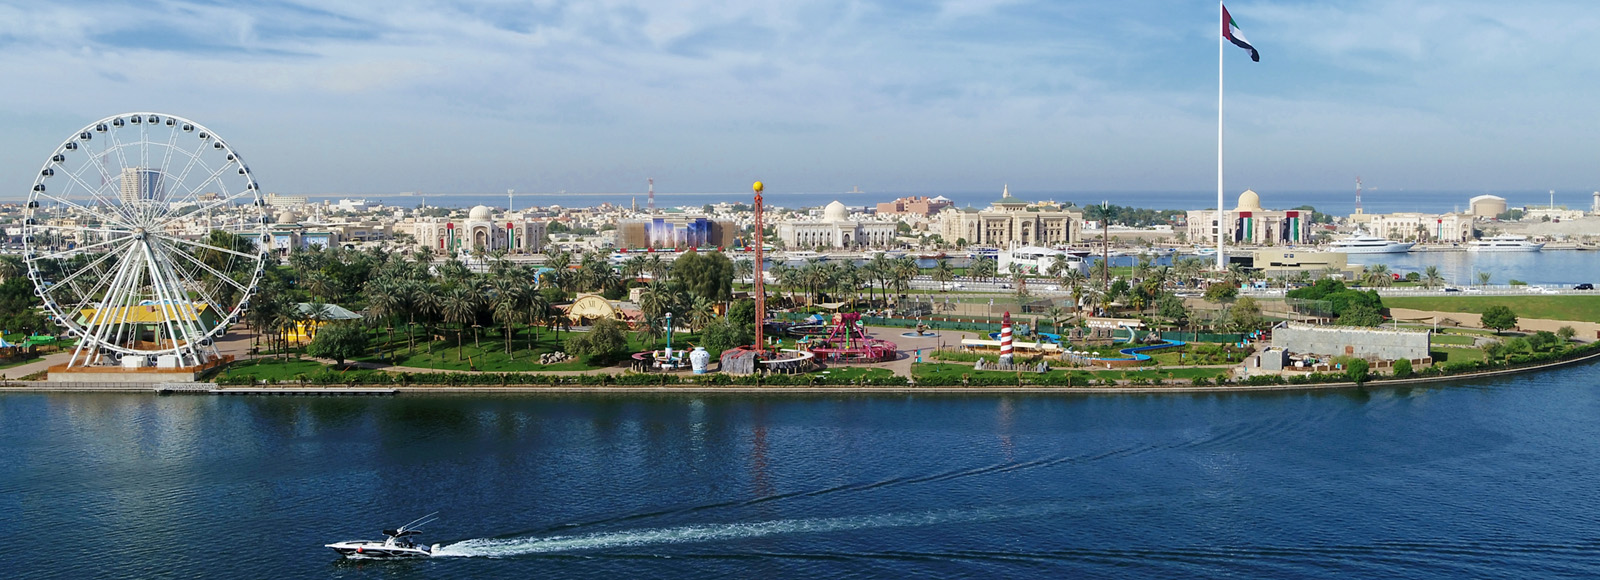 hamriyah port Sharjah slider image by OSS FZC - ENERGY LOGISTICS